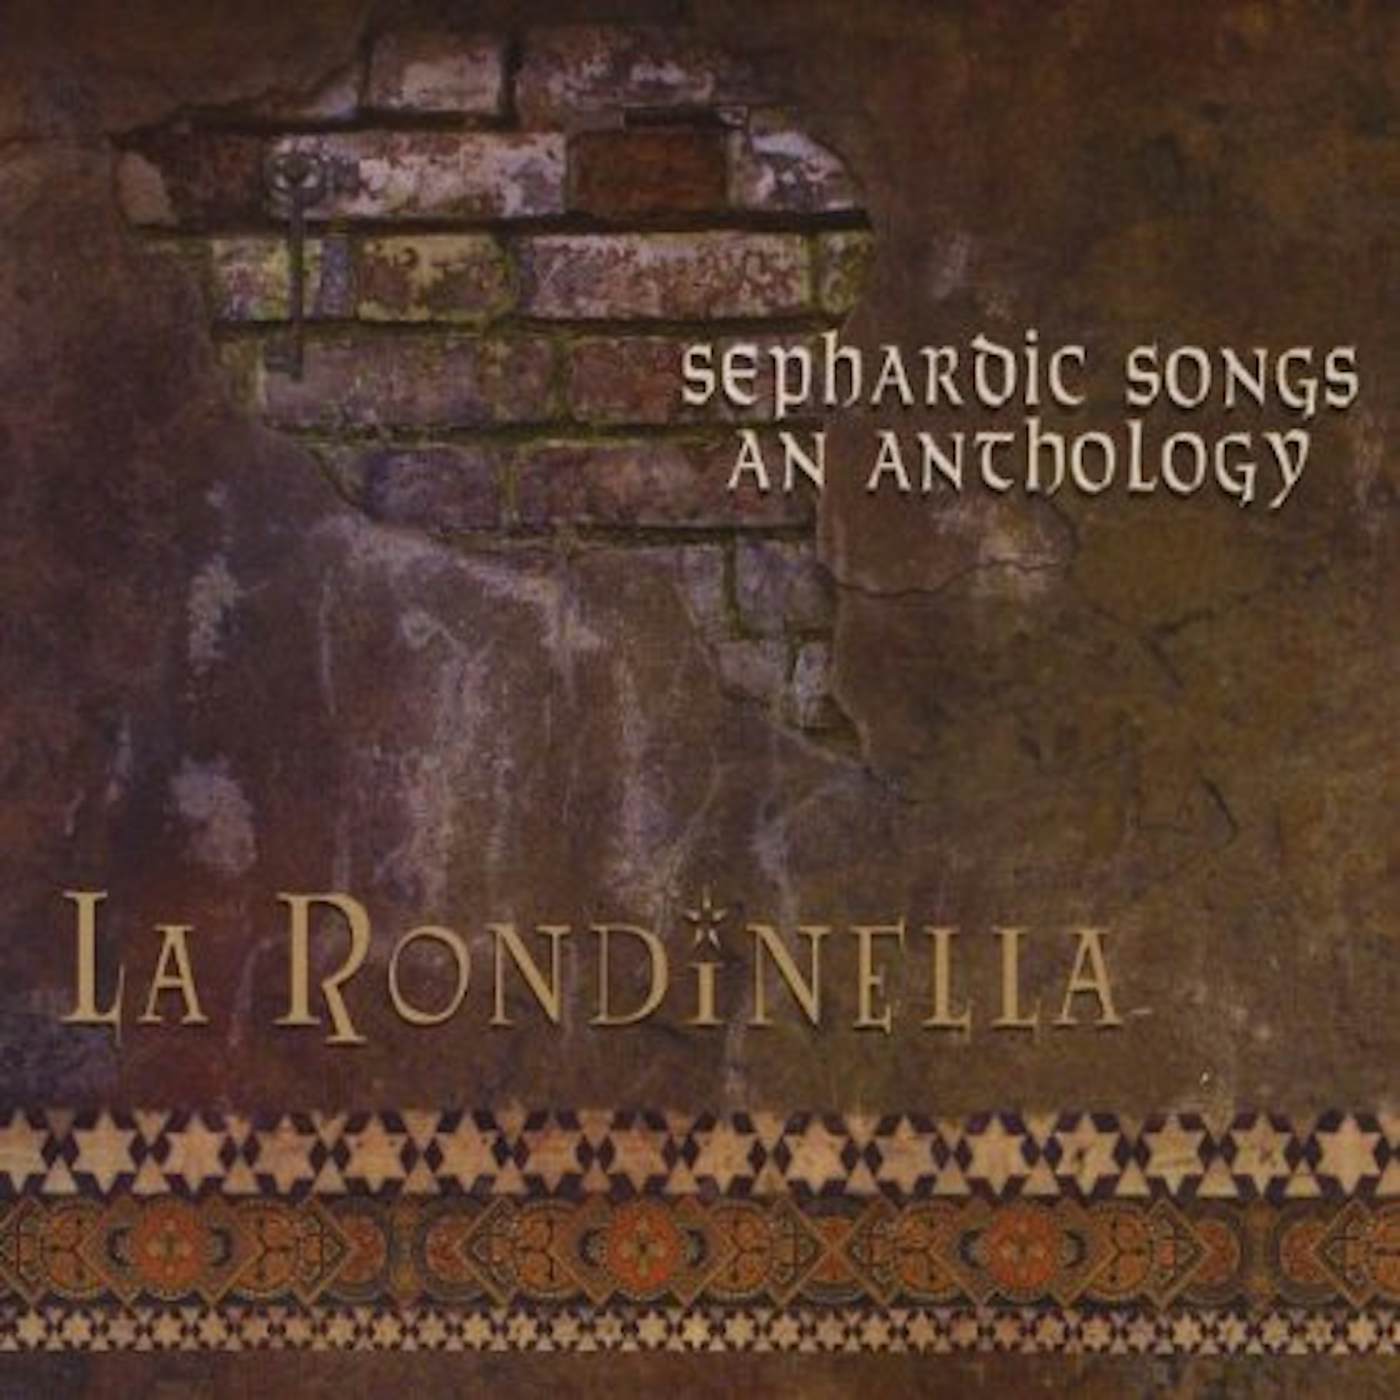 La Rondinella SEPHARDIC SONGS: AN ANTHOLOGY CD